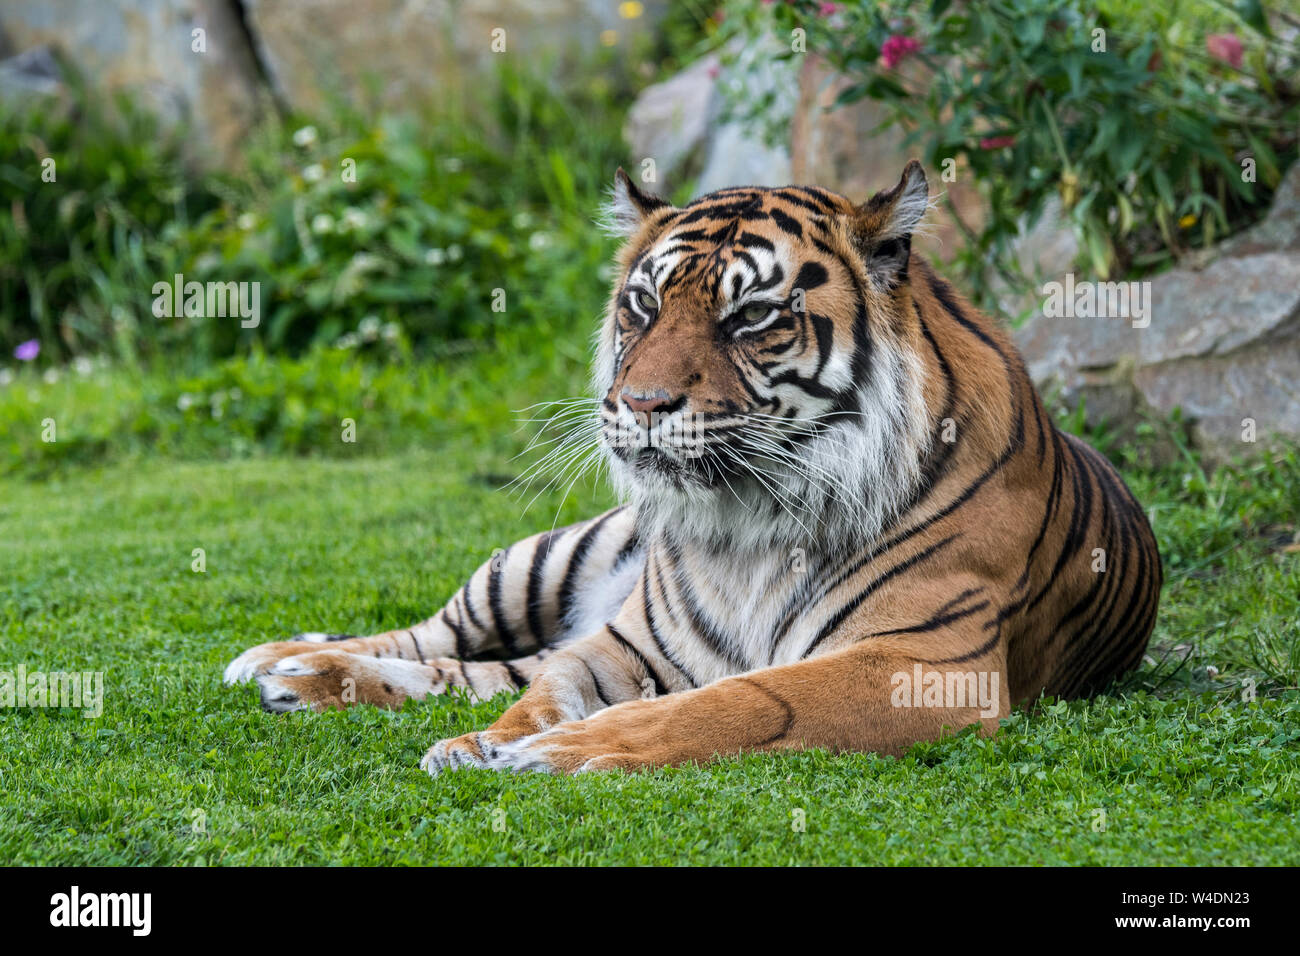 Sumatran tiger (Panthera tigris sondaica) native to the Indonesian island of Sumatra, Indonesia Stock Photo